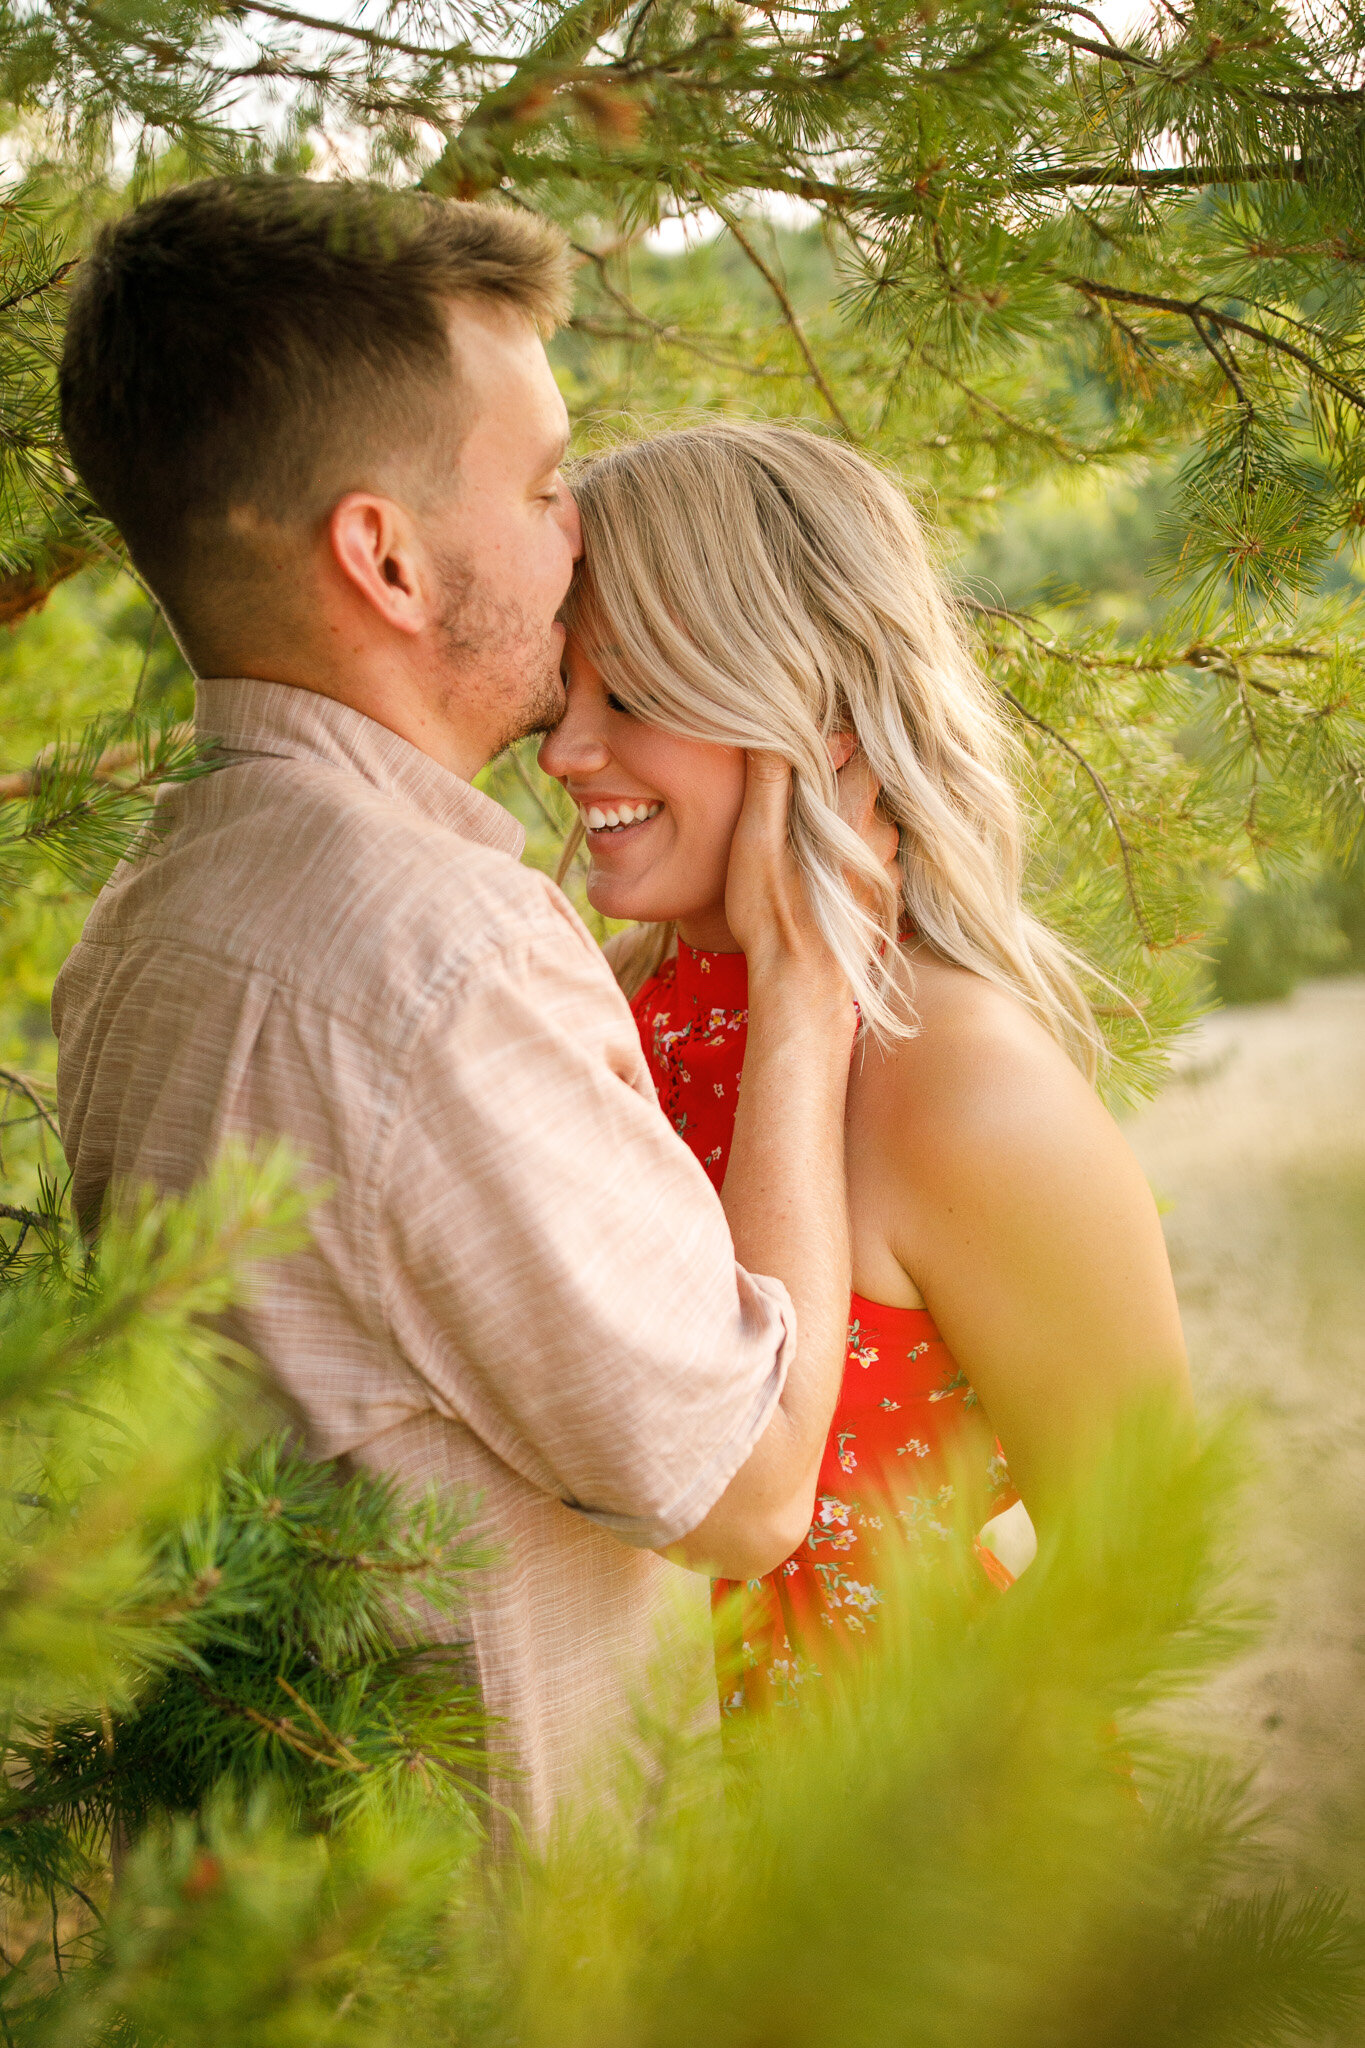 Chris and Kaleen Summer 2020 - Provin Trails - Grand Rapids Wedding Photographer - West Michigan Wedding Photographer - J Darling Photo 010.jpg